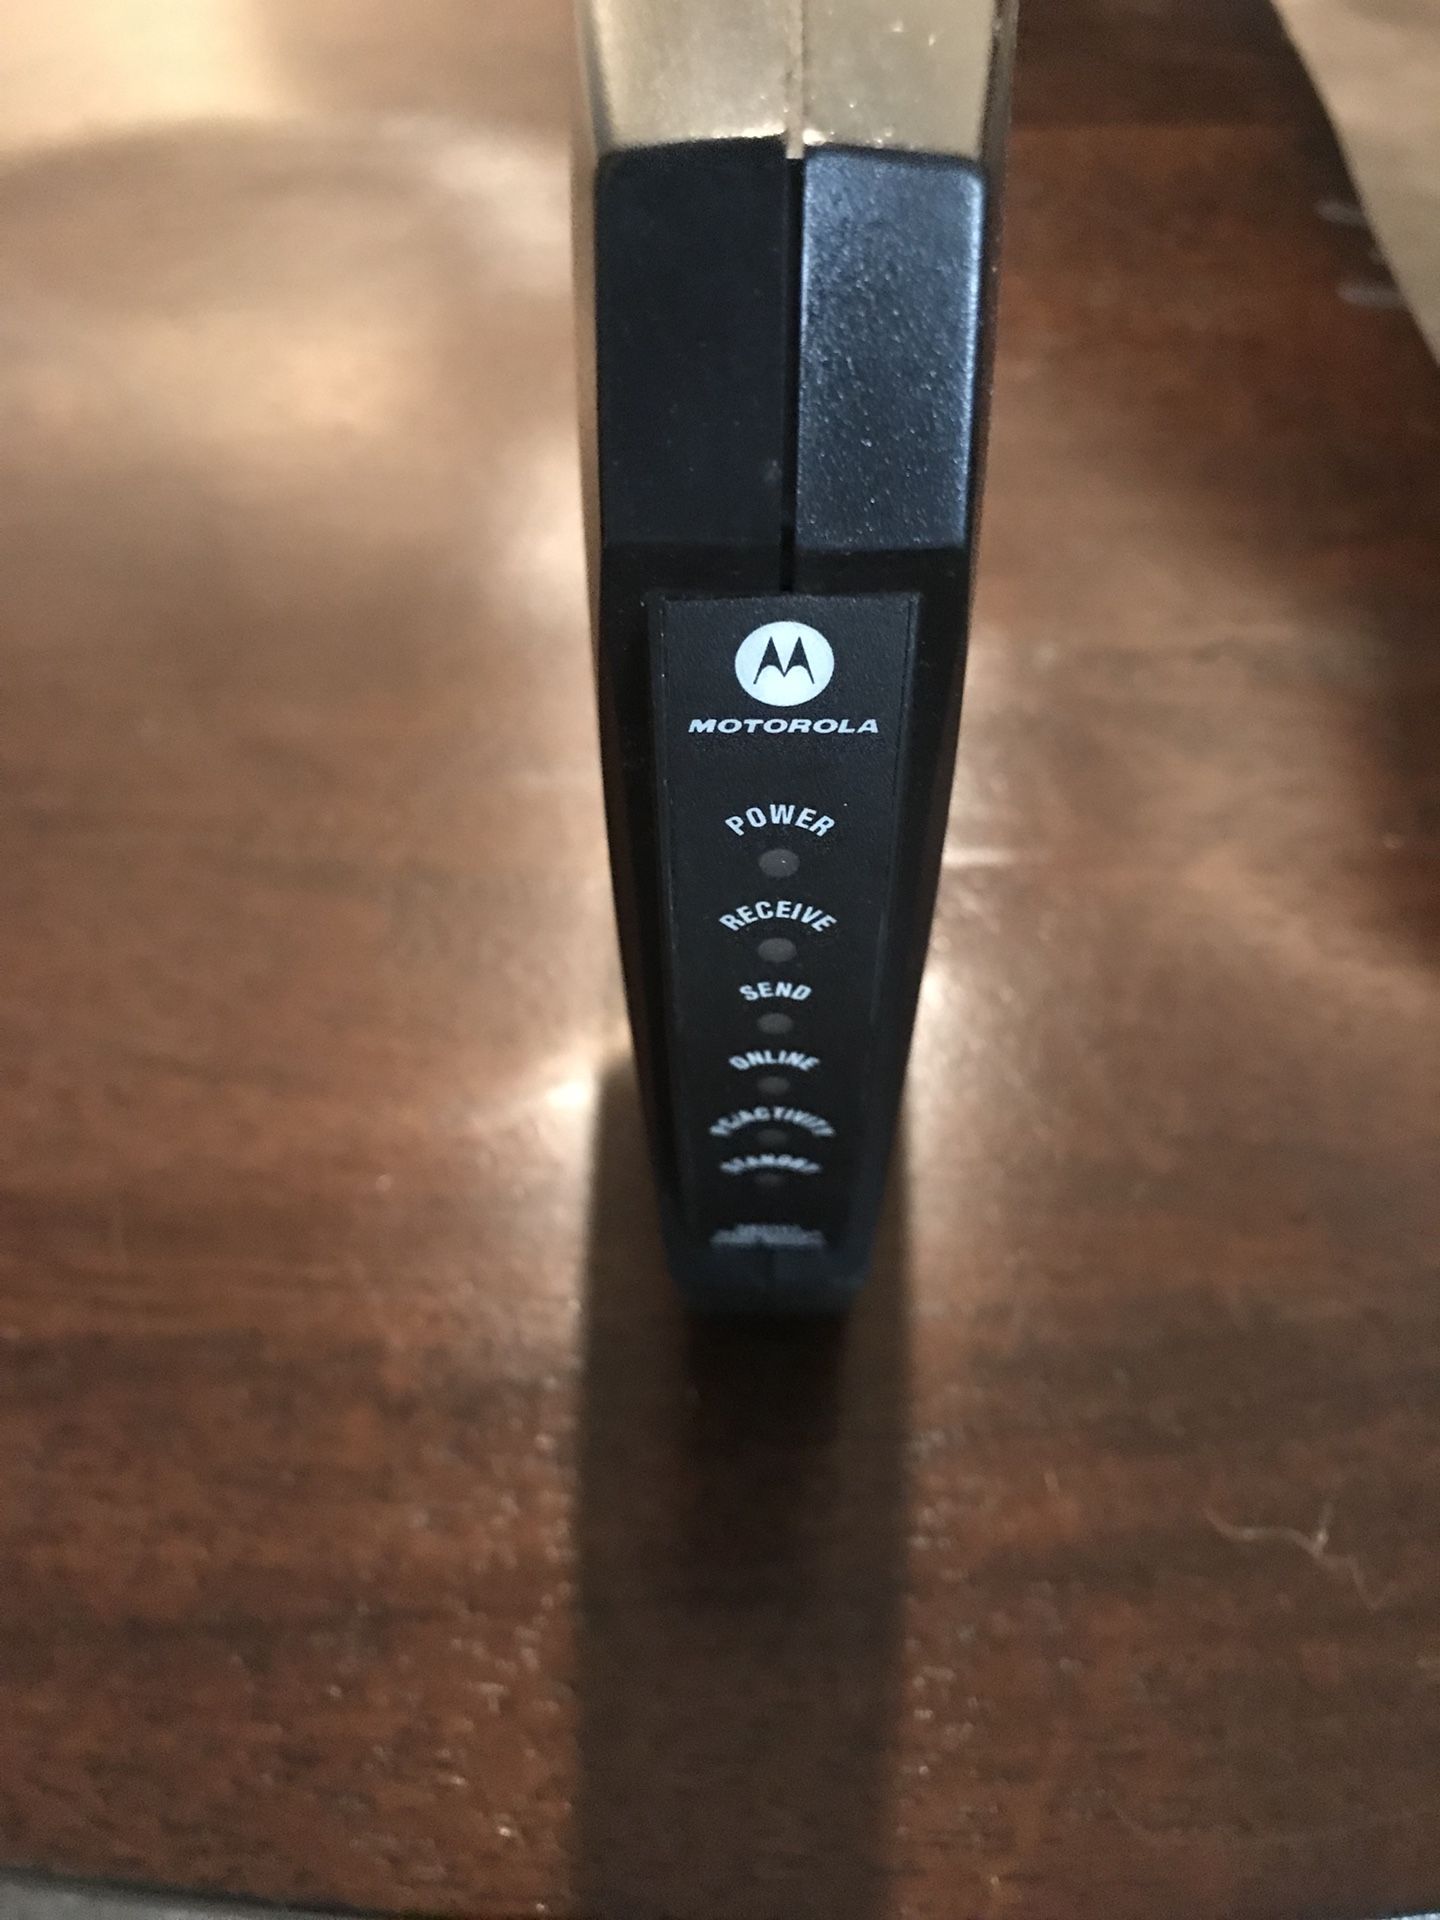 Motorola cable modem